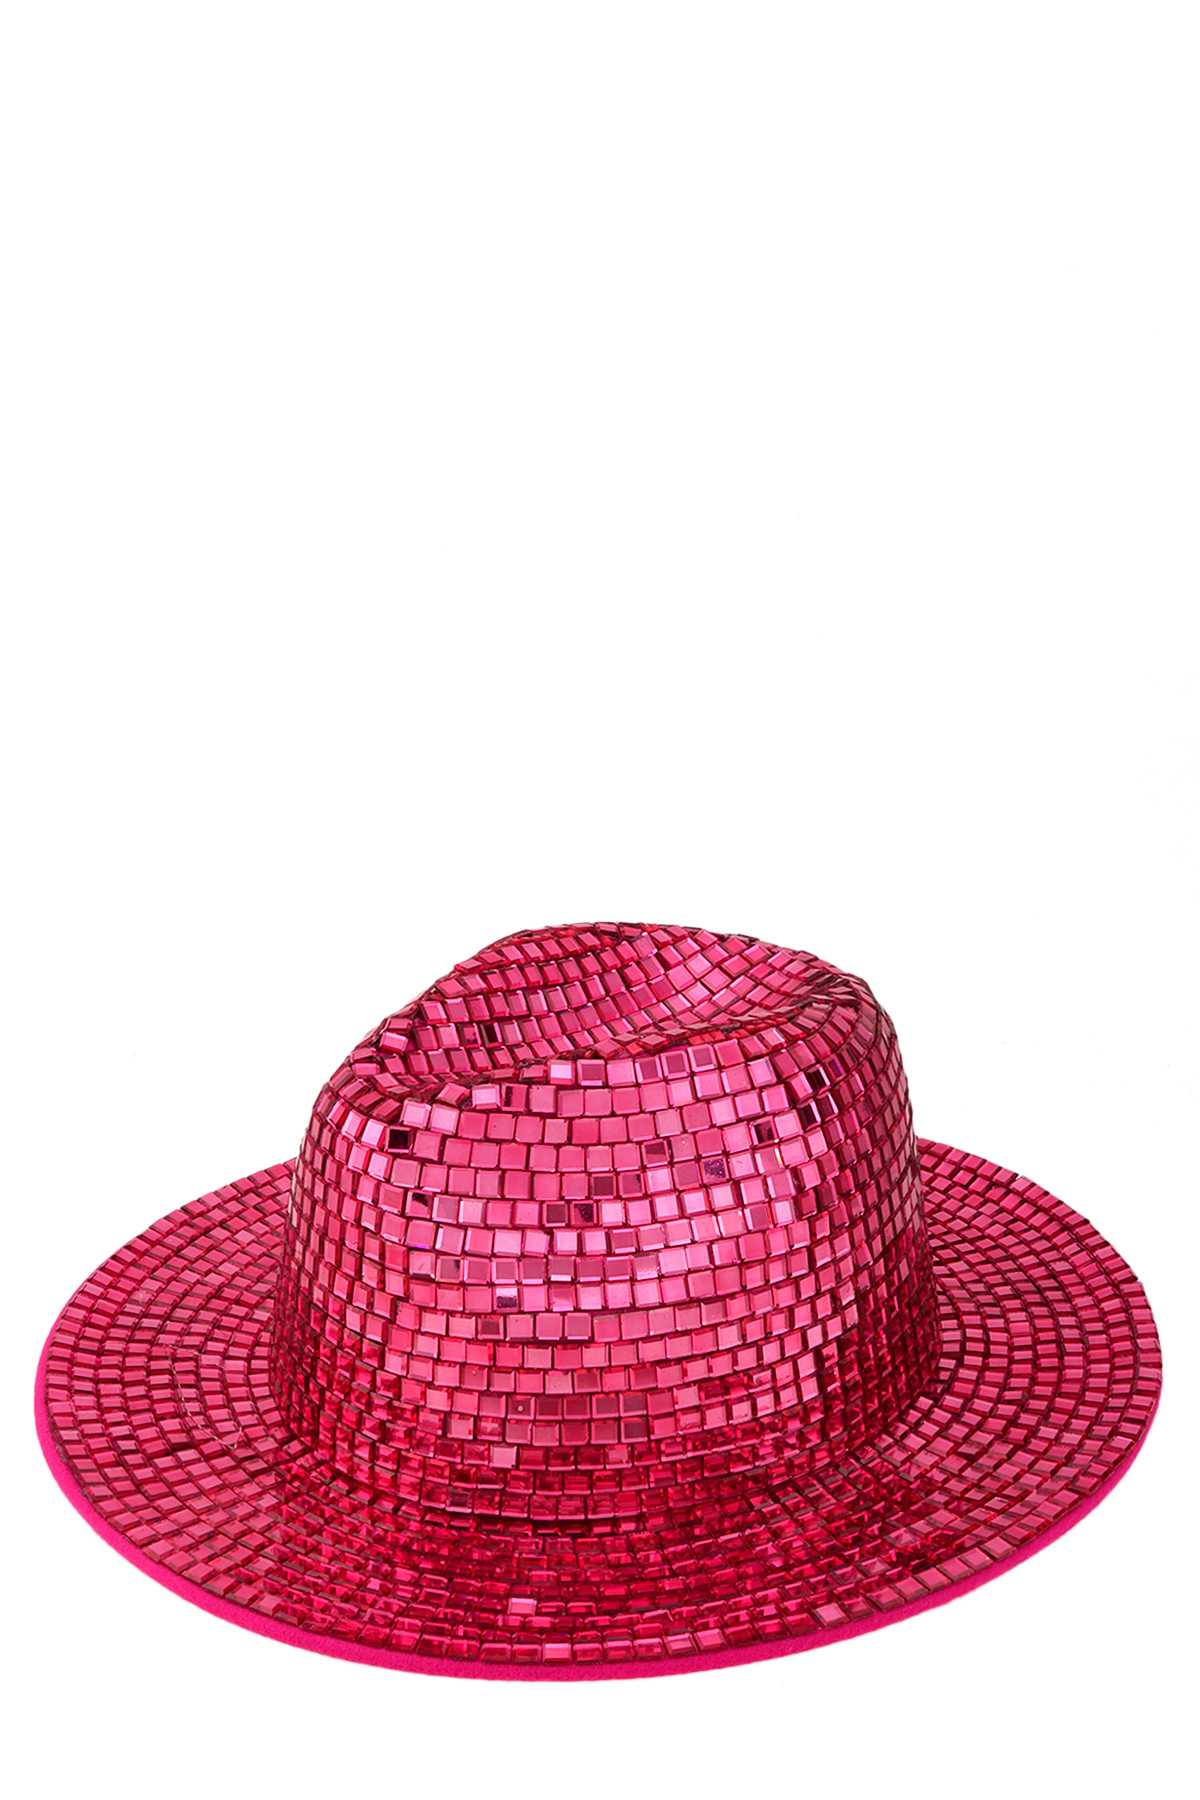 Rhinestone Sparkly Fedora Hat